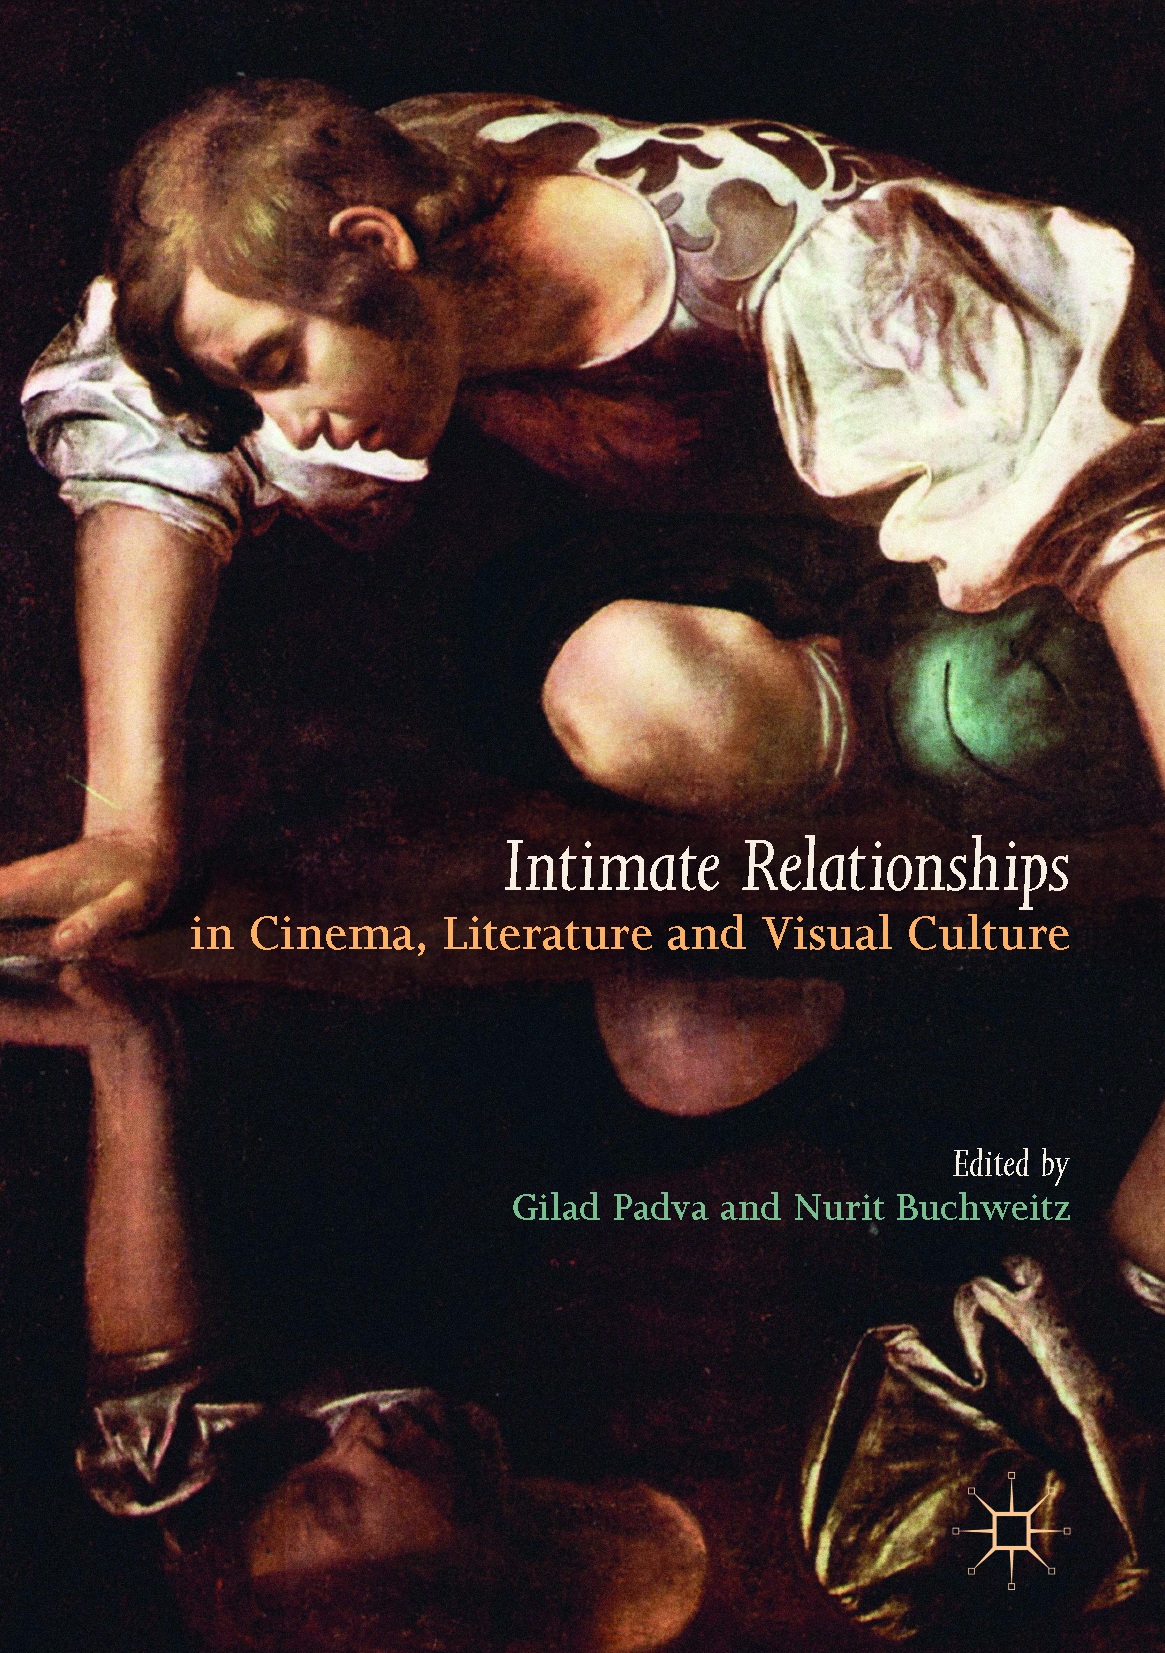 Buchweitz, Nurit - Intimate Relationships in Cinema, Literature and Visual Culture, ebook